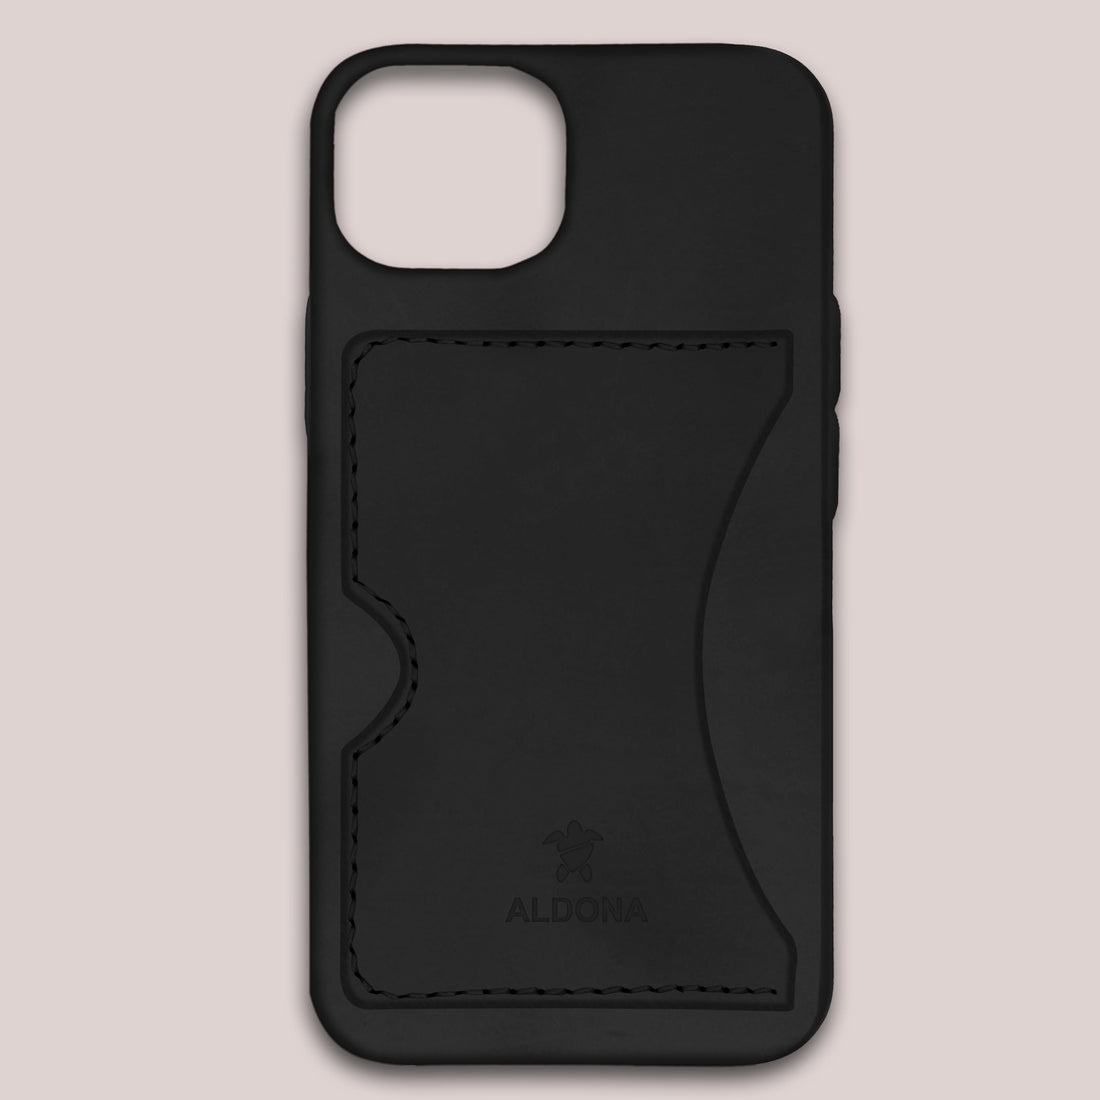 Baxter Card Case for iPhone 12 Mini - Onyx Black